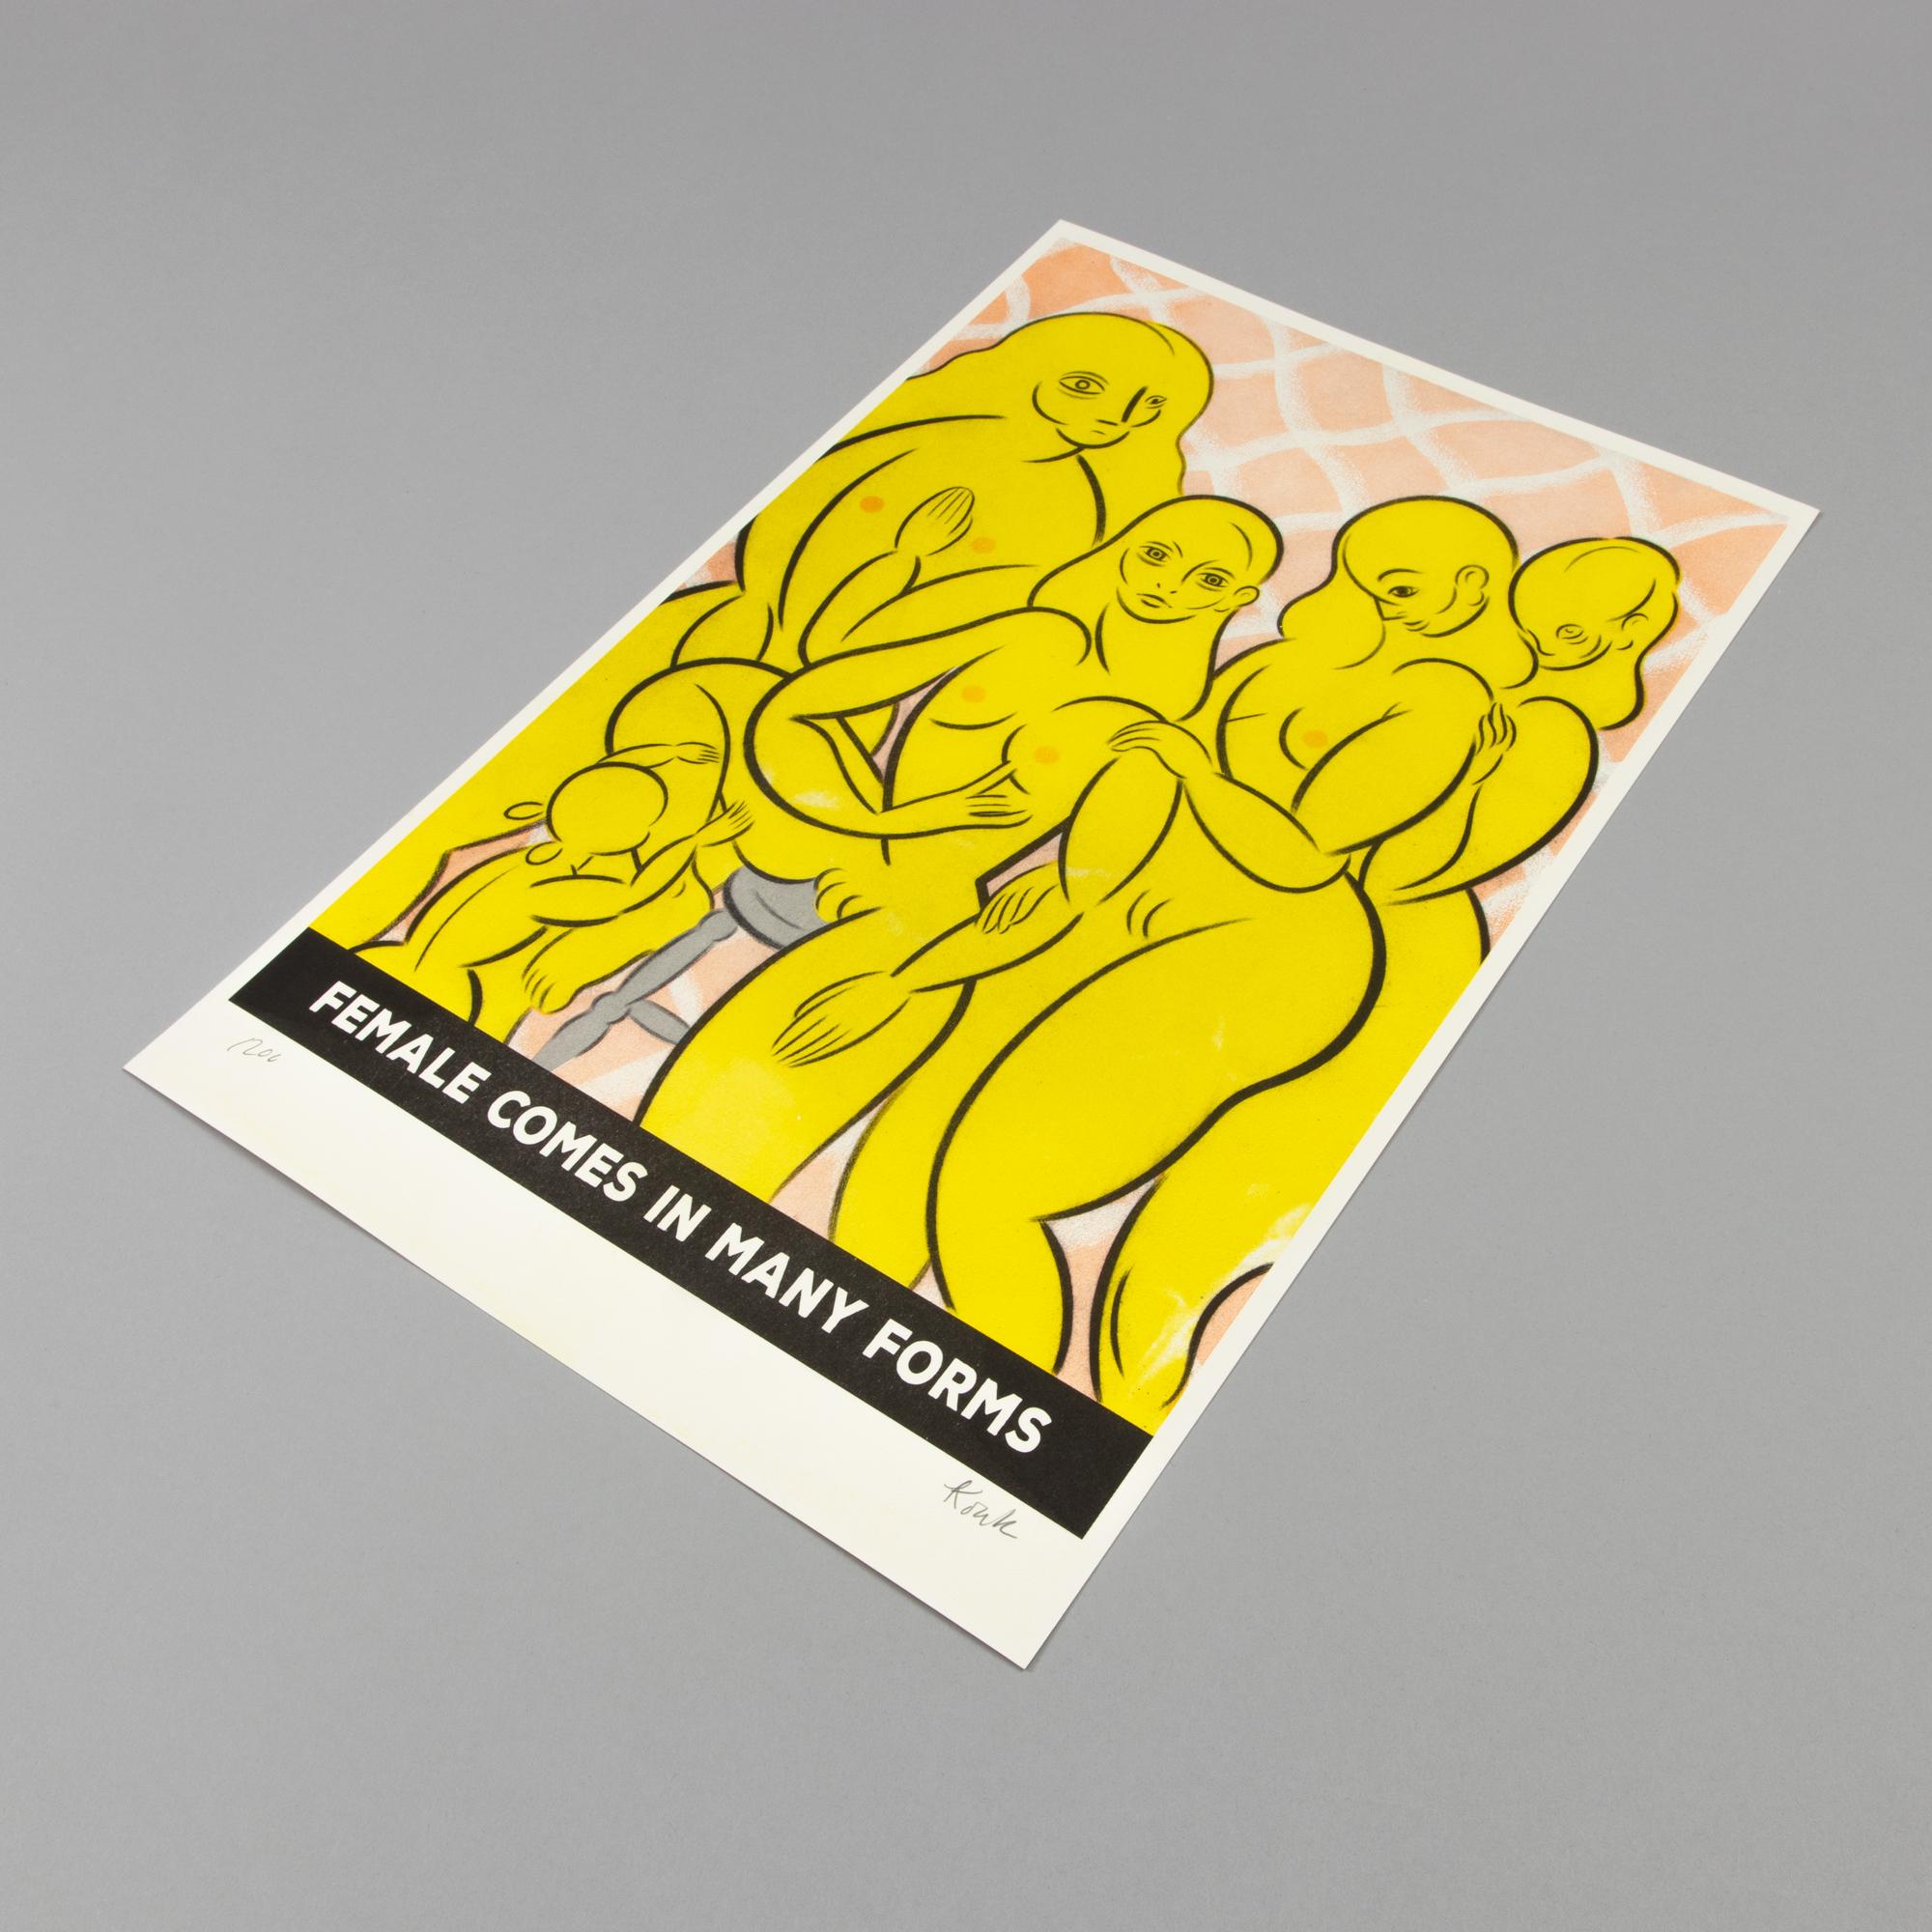 Koak, Female Comes In Many Forms - Signed Print, 2019, Zeitgenössische Kunst im Angebot 1